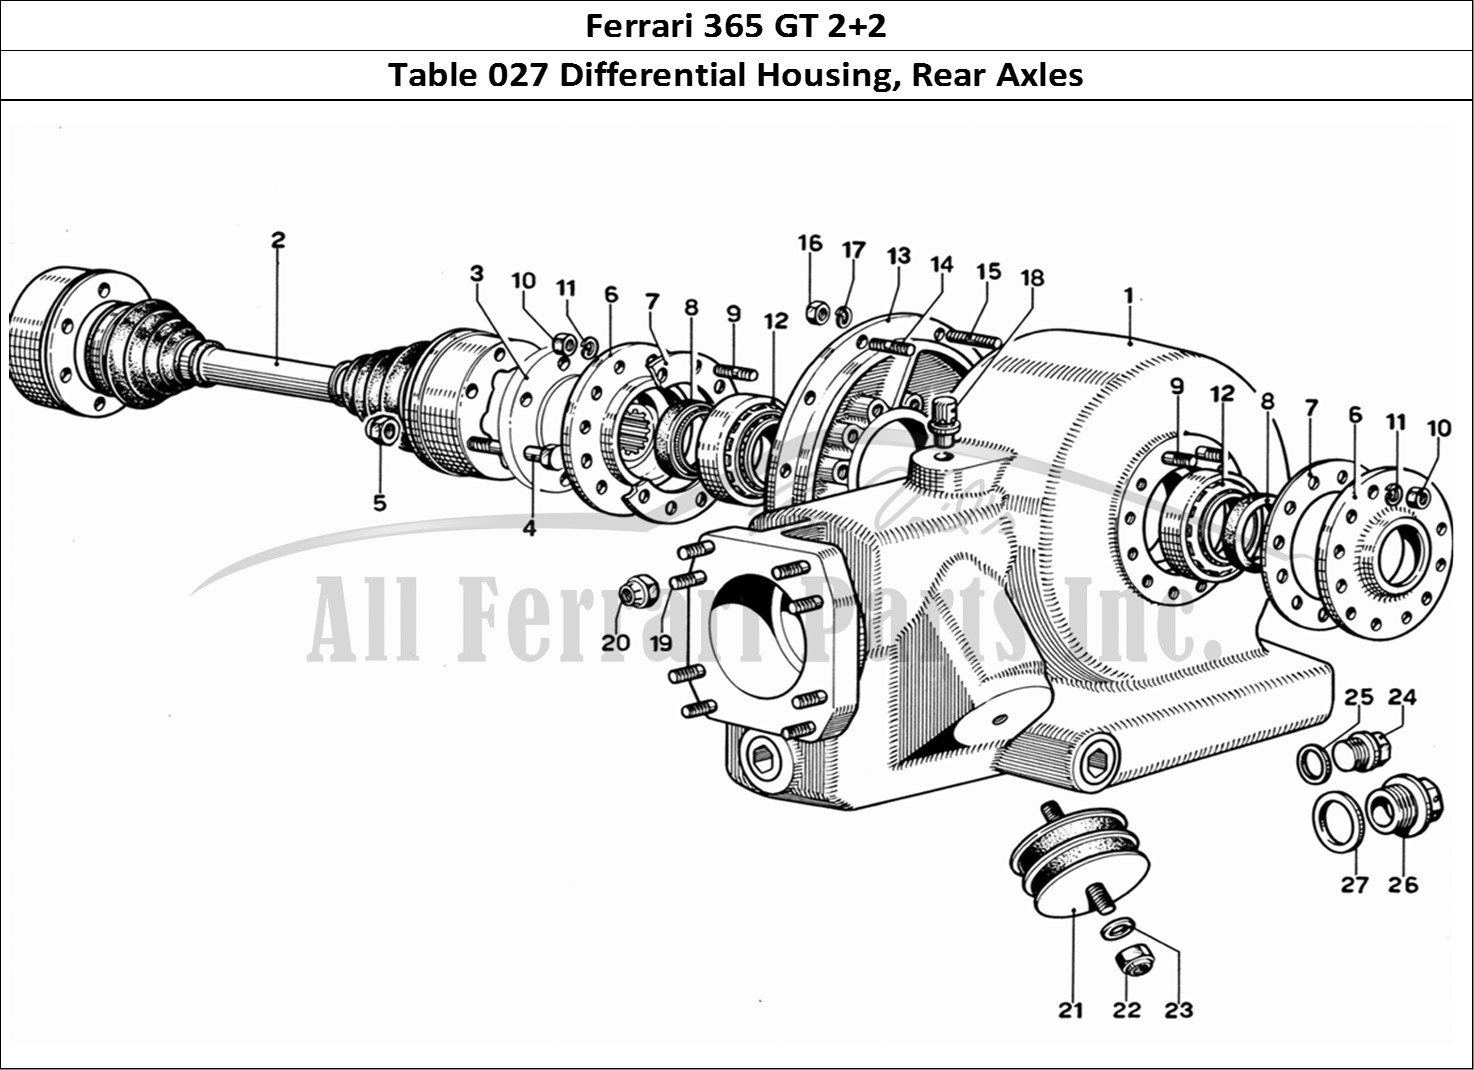 Ferrari Parts Ferrari 365 GT 2+2 (Mechanical) Page 027 Rear Axle and Axle